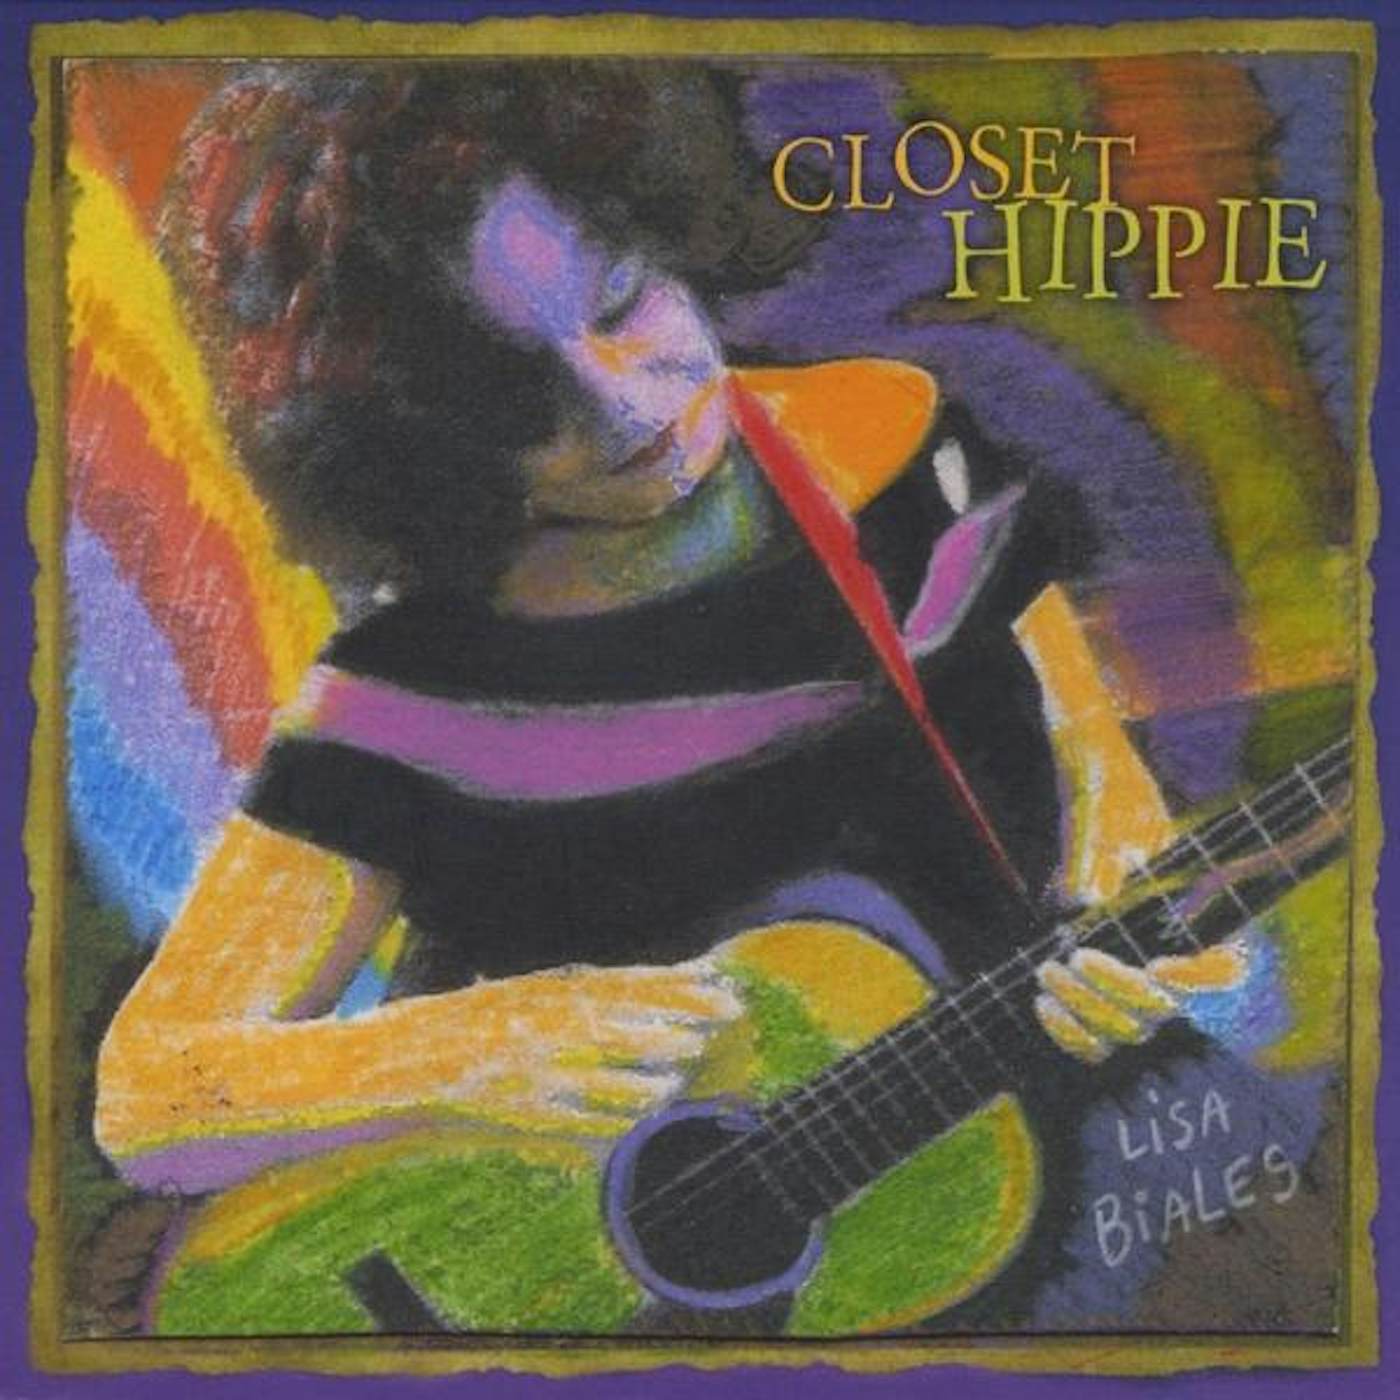 Lisa Biales CLOSET HIPPIE CD